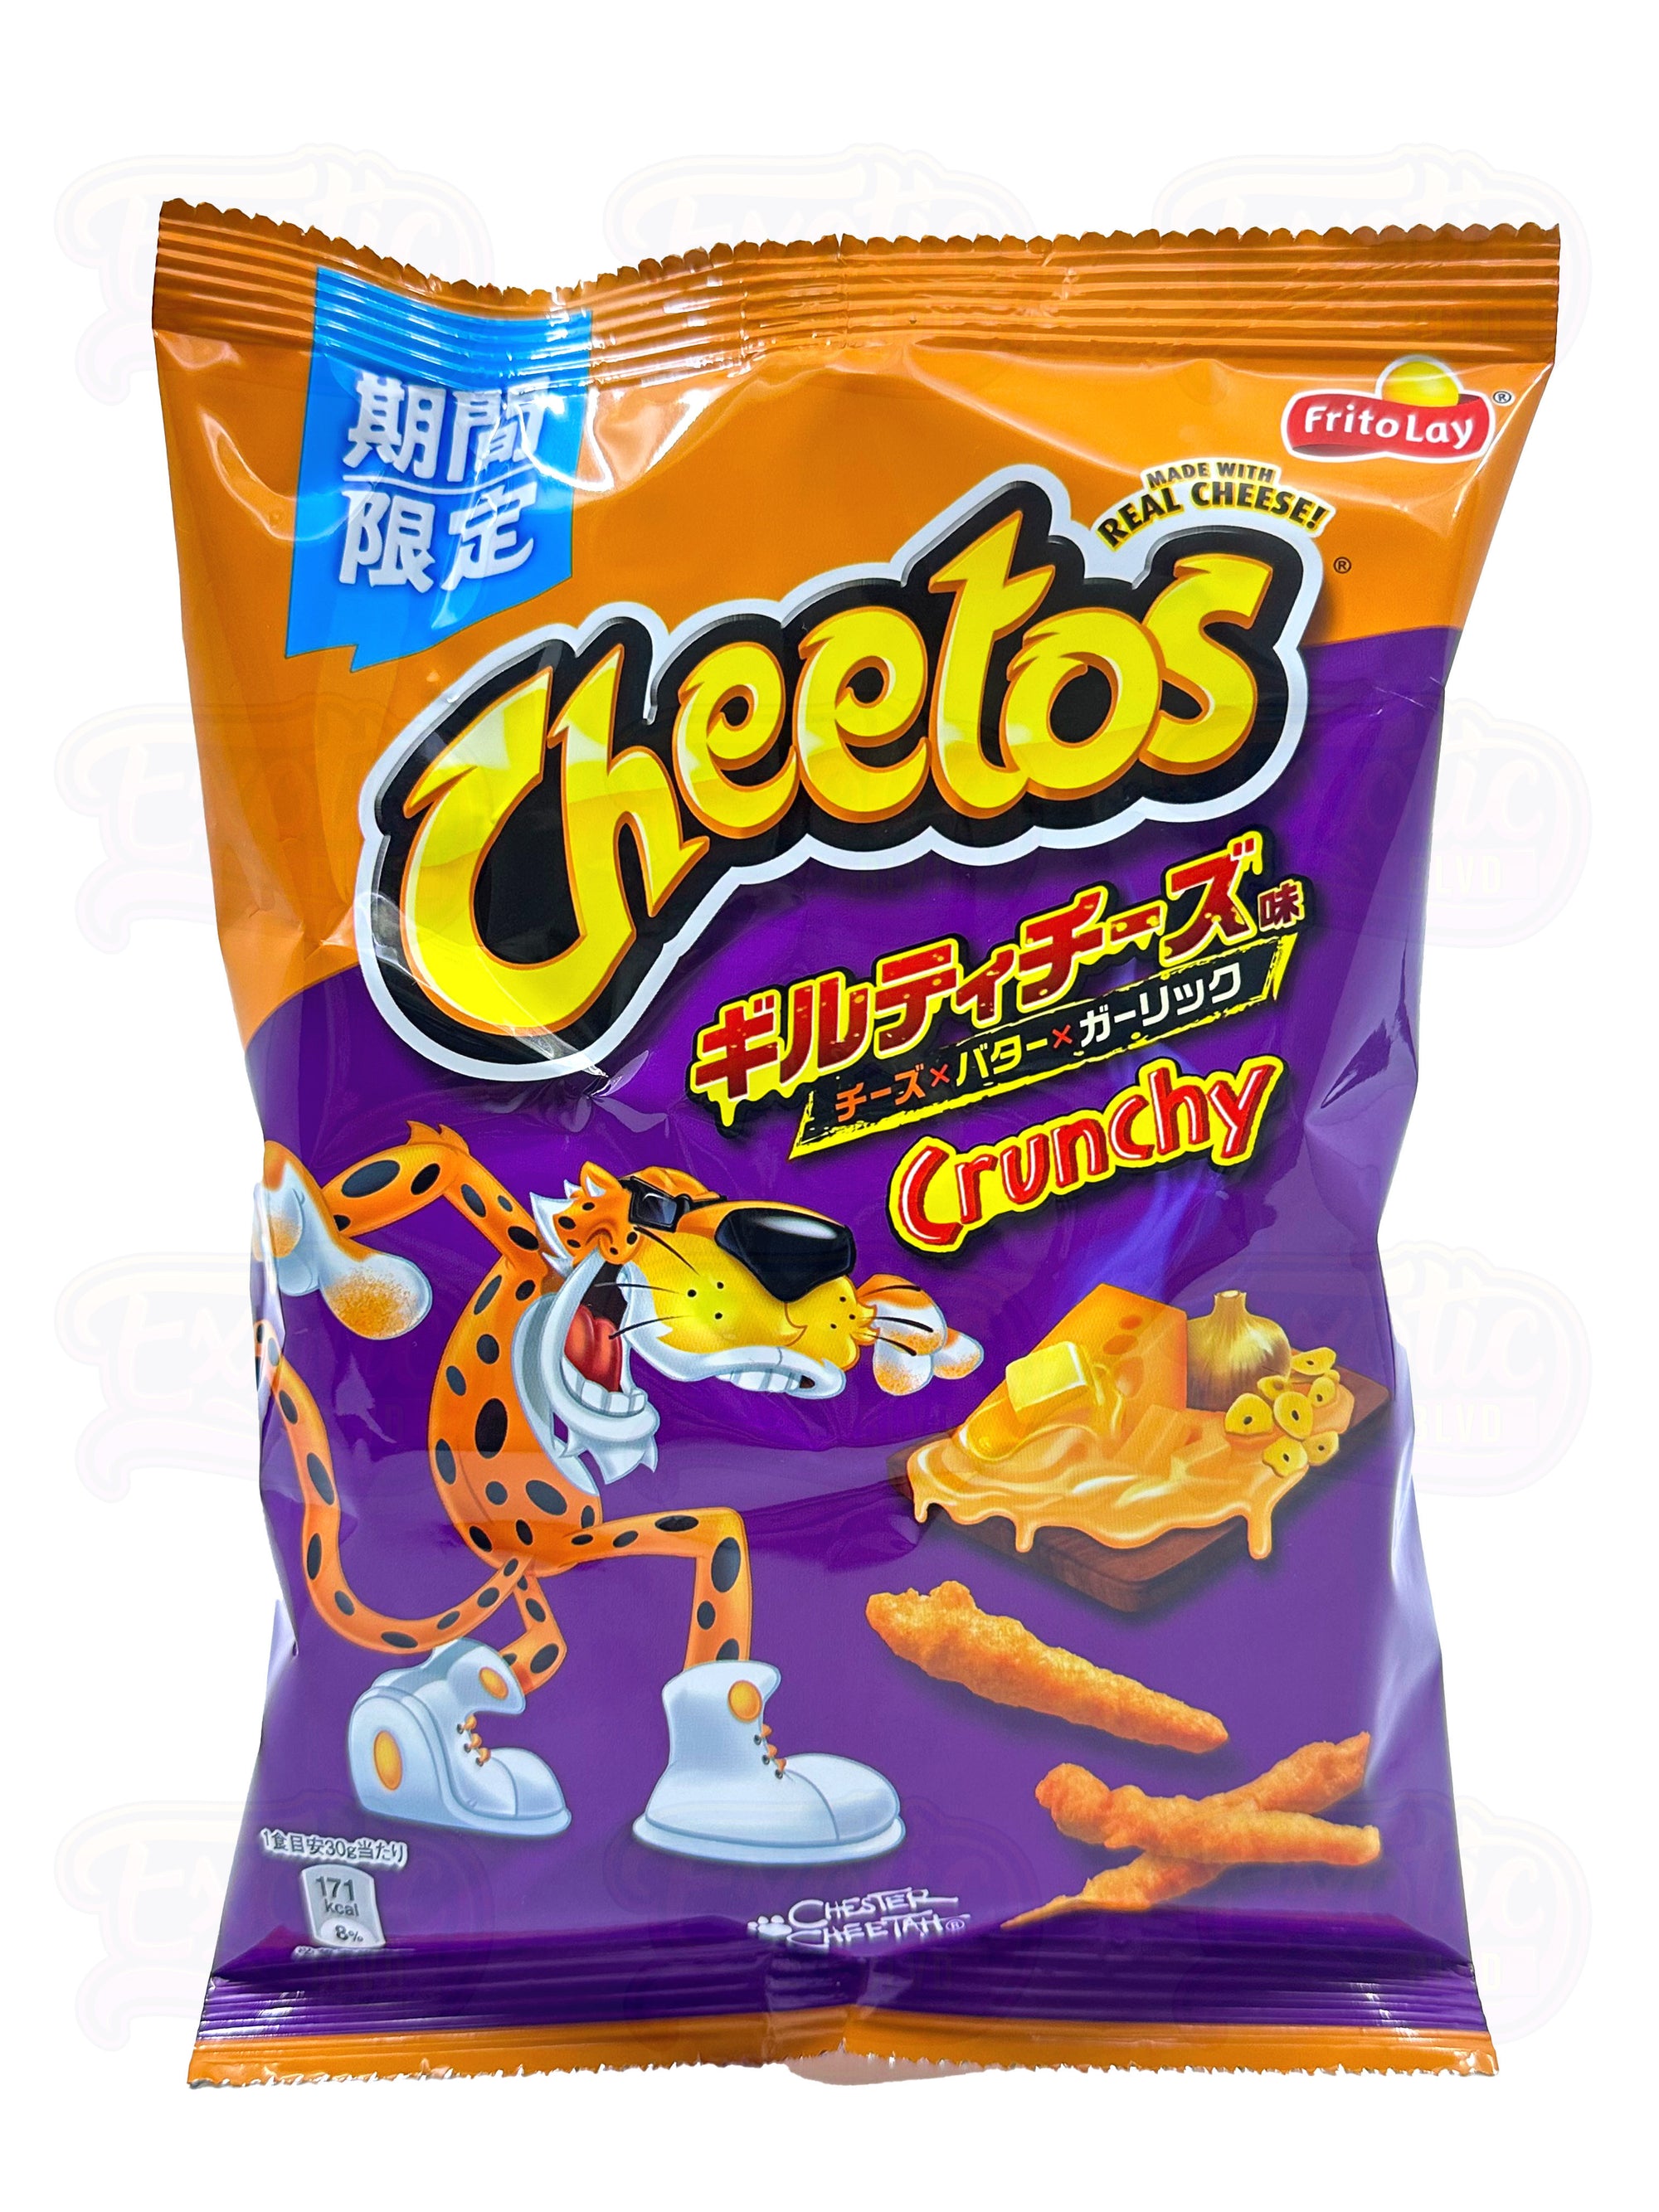 Cheetos Guilty Cheese